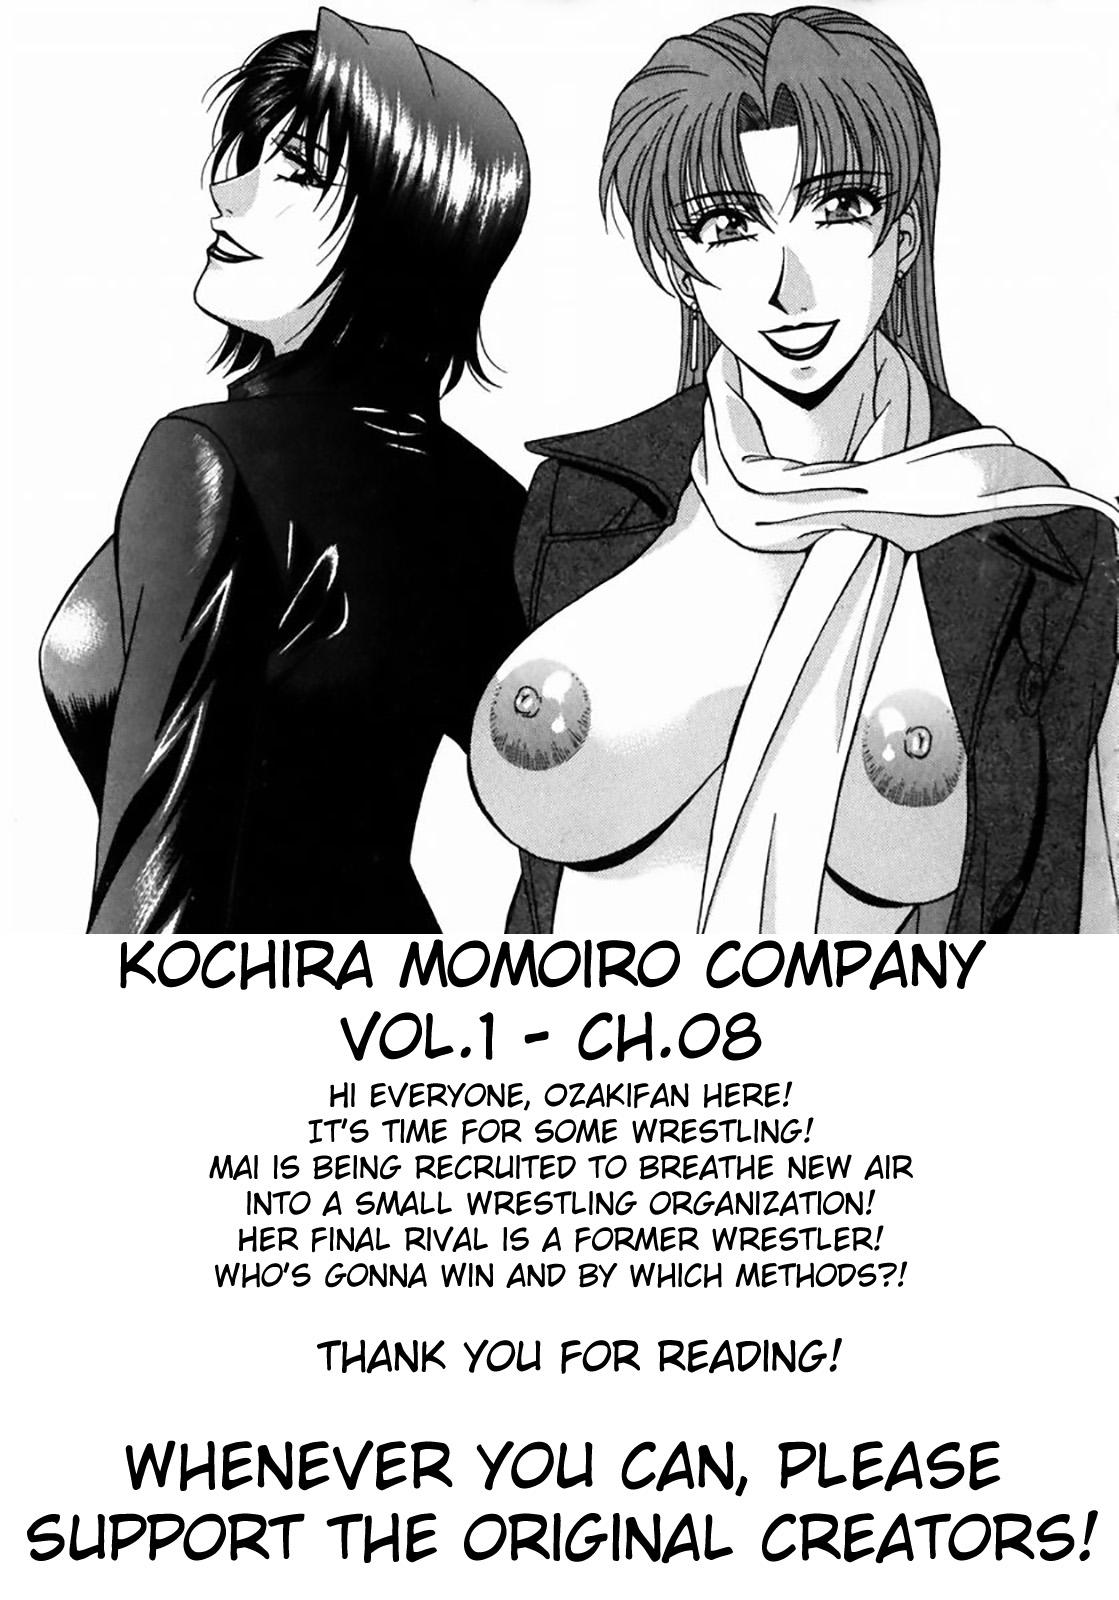 Kochira Momoiro Company Vol. 1 173